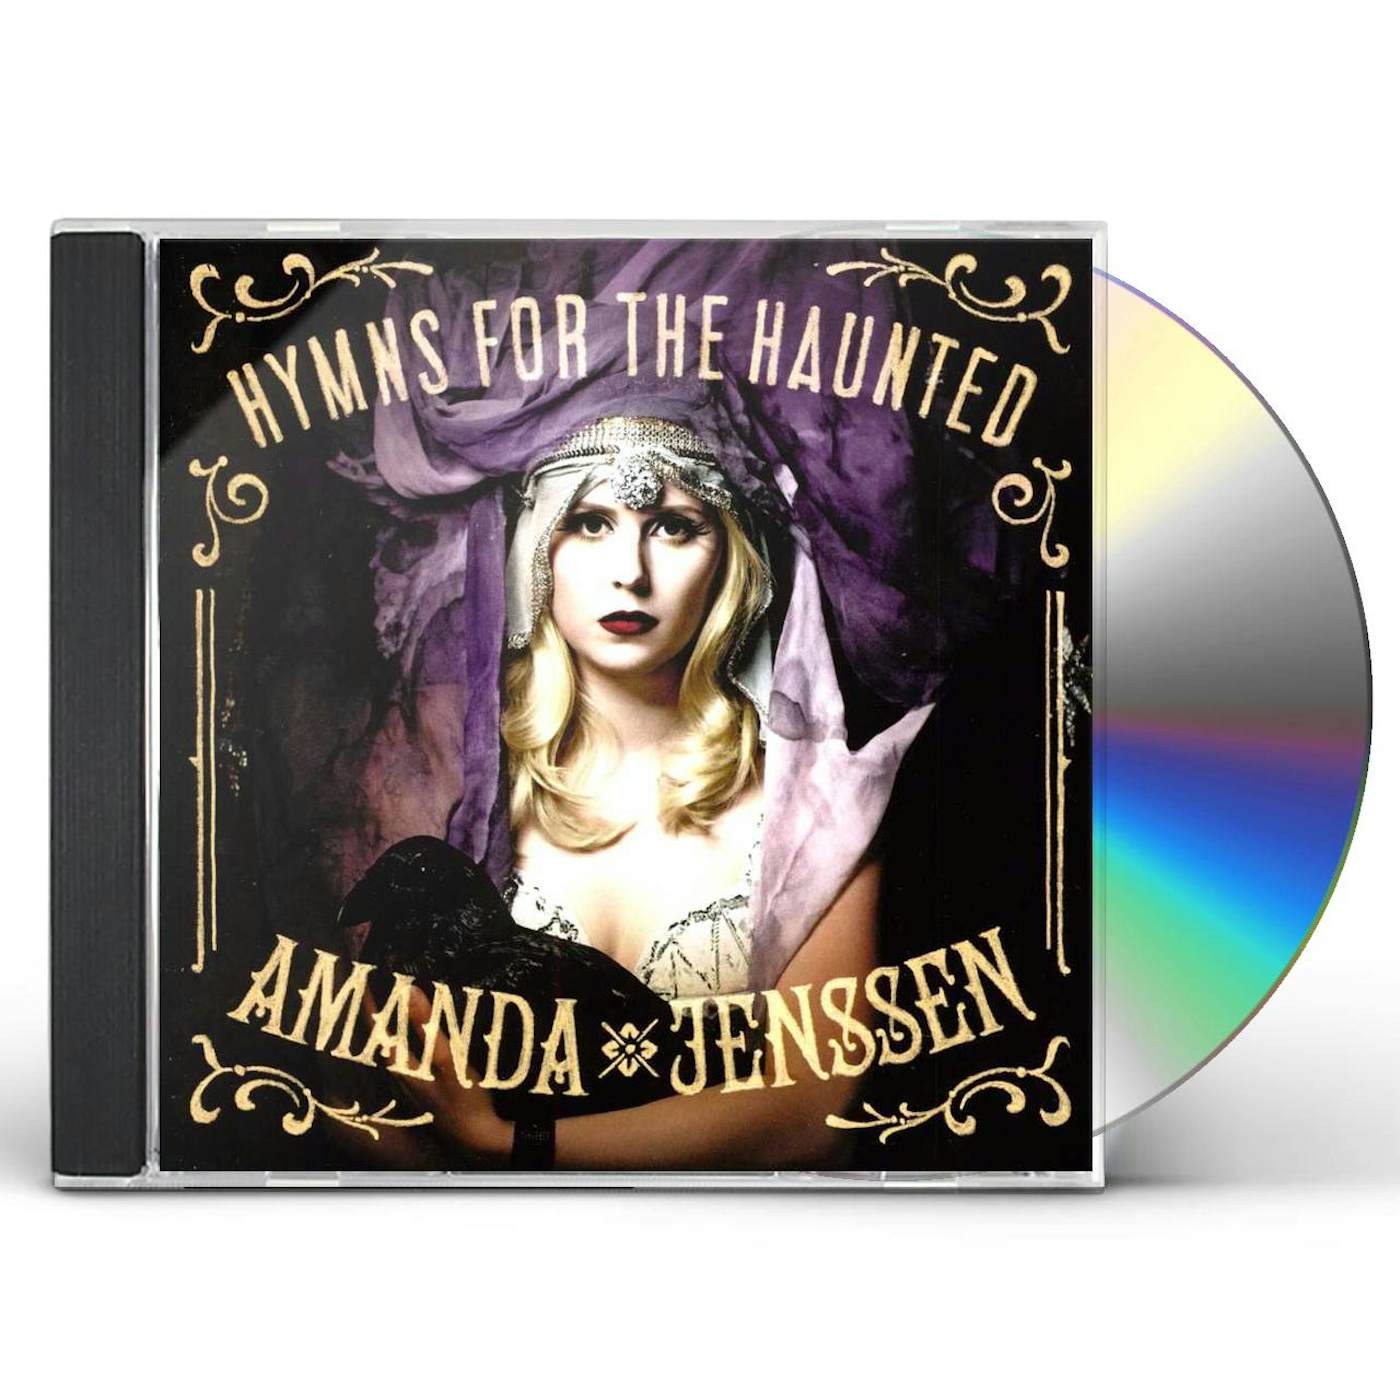 Amanda Jenssen HYMNS FOR THE HAUNTED CD